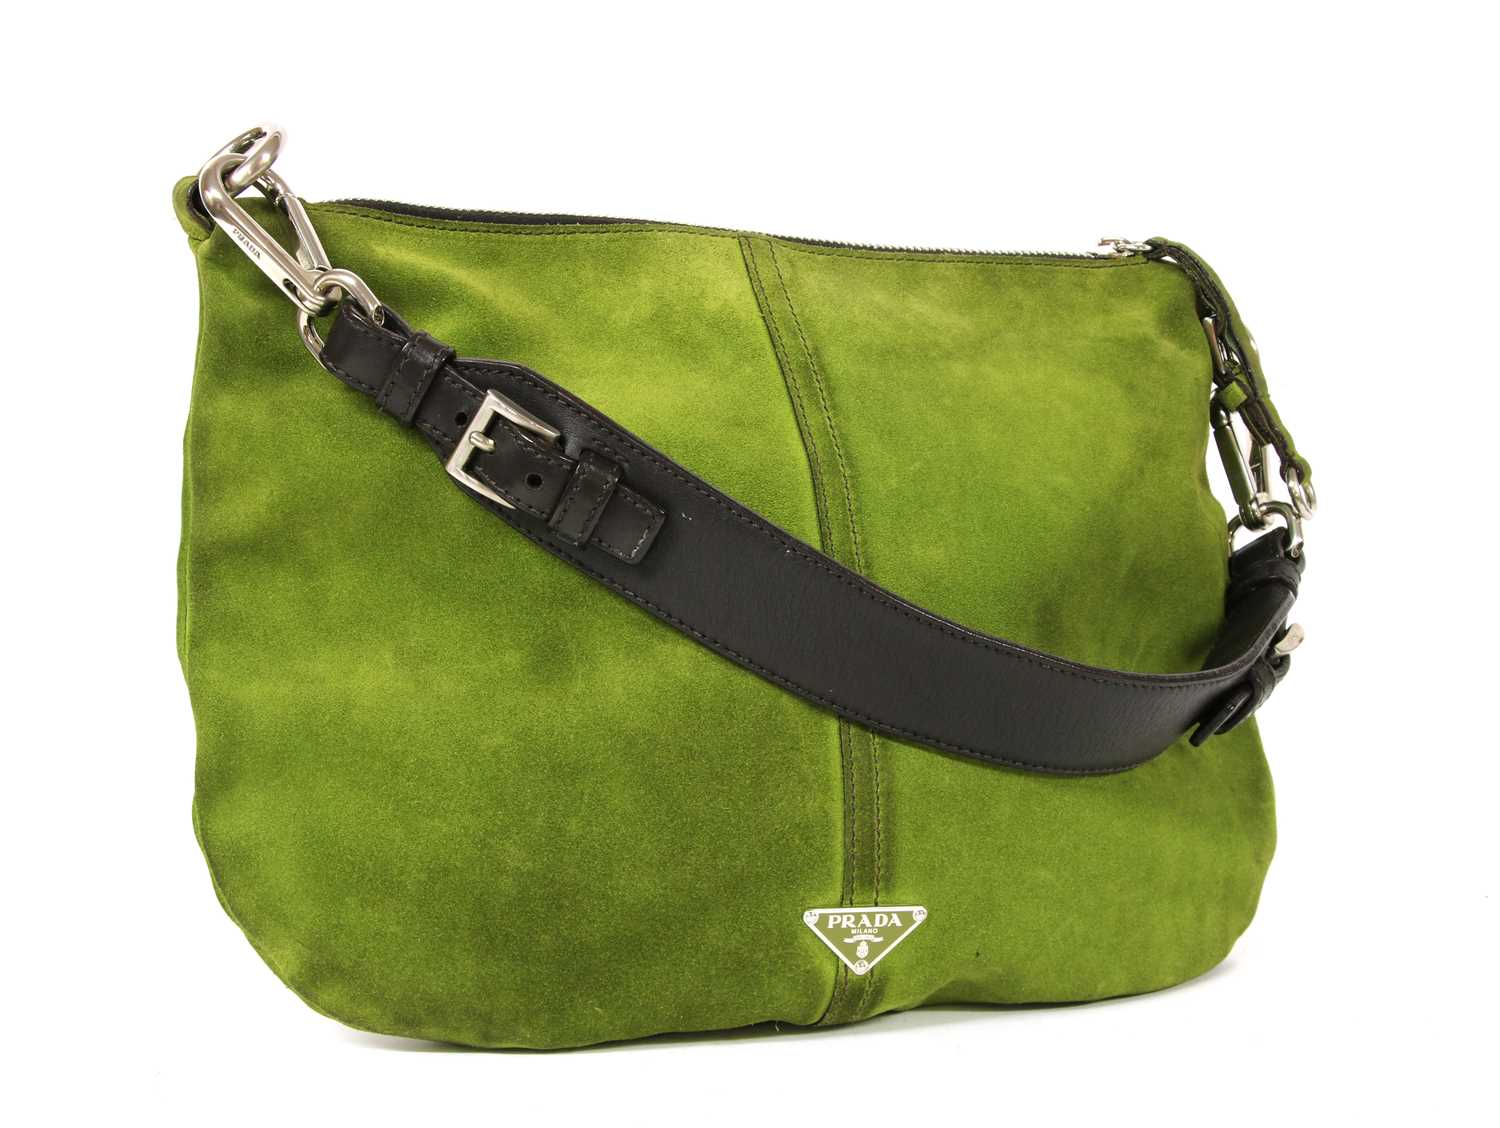 Past auction: Brown suede Chanel messenger bag style purse